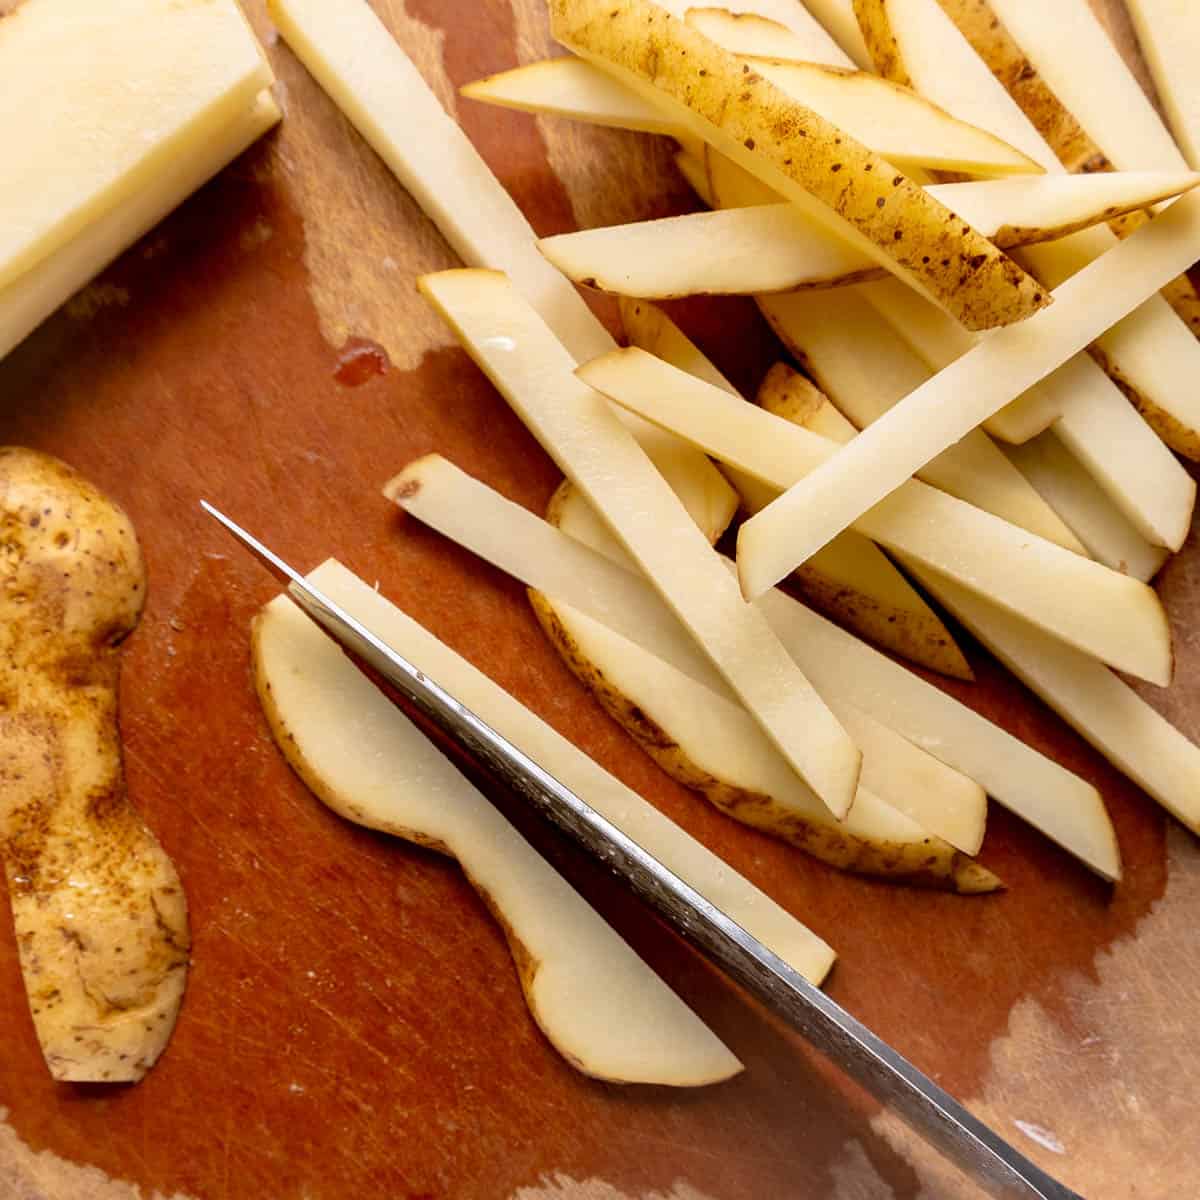 A knife slicing potatoes.